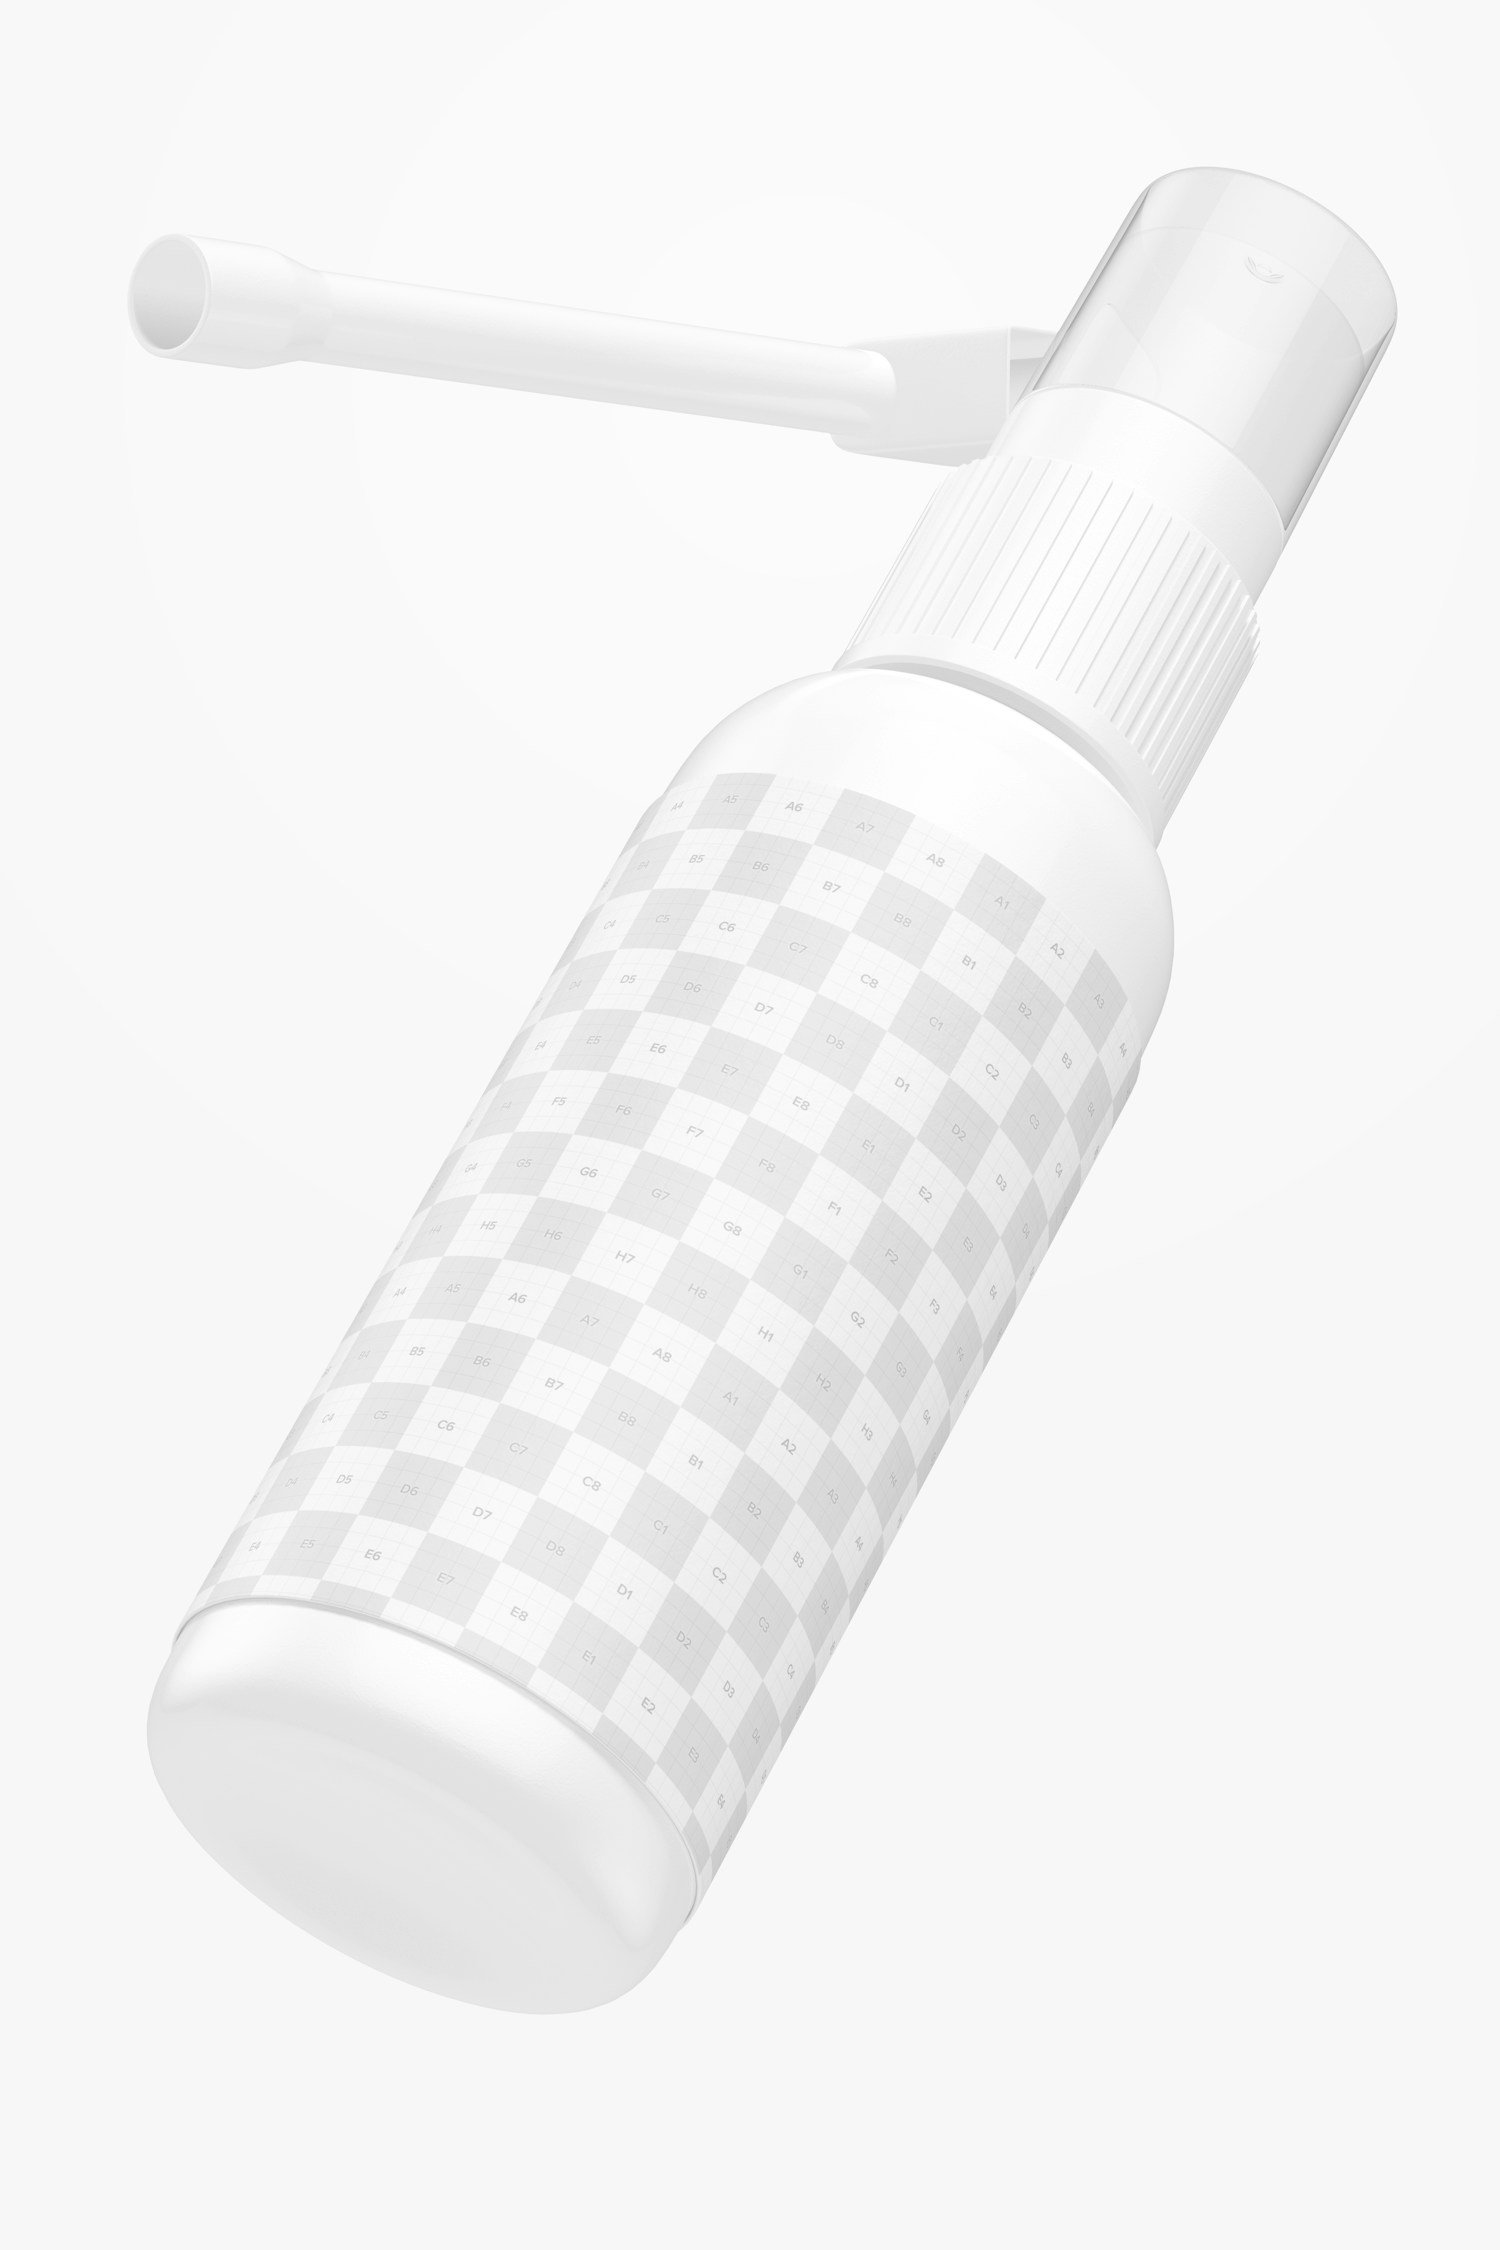 50 ml Plastic Spray Bottle Mockup, Floating